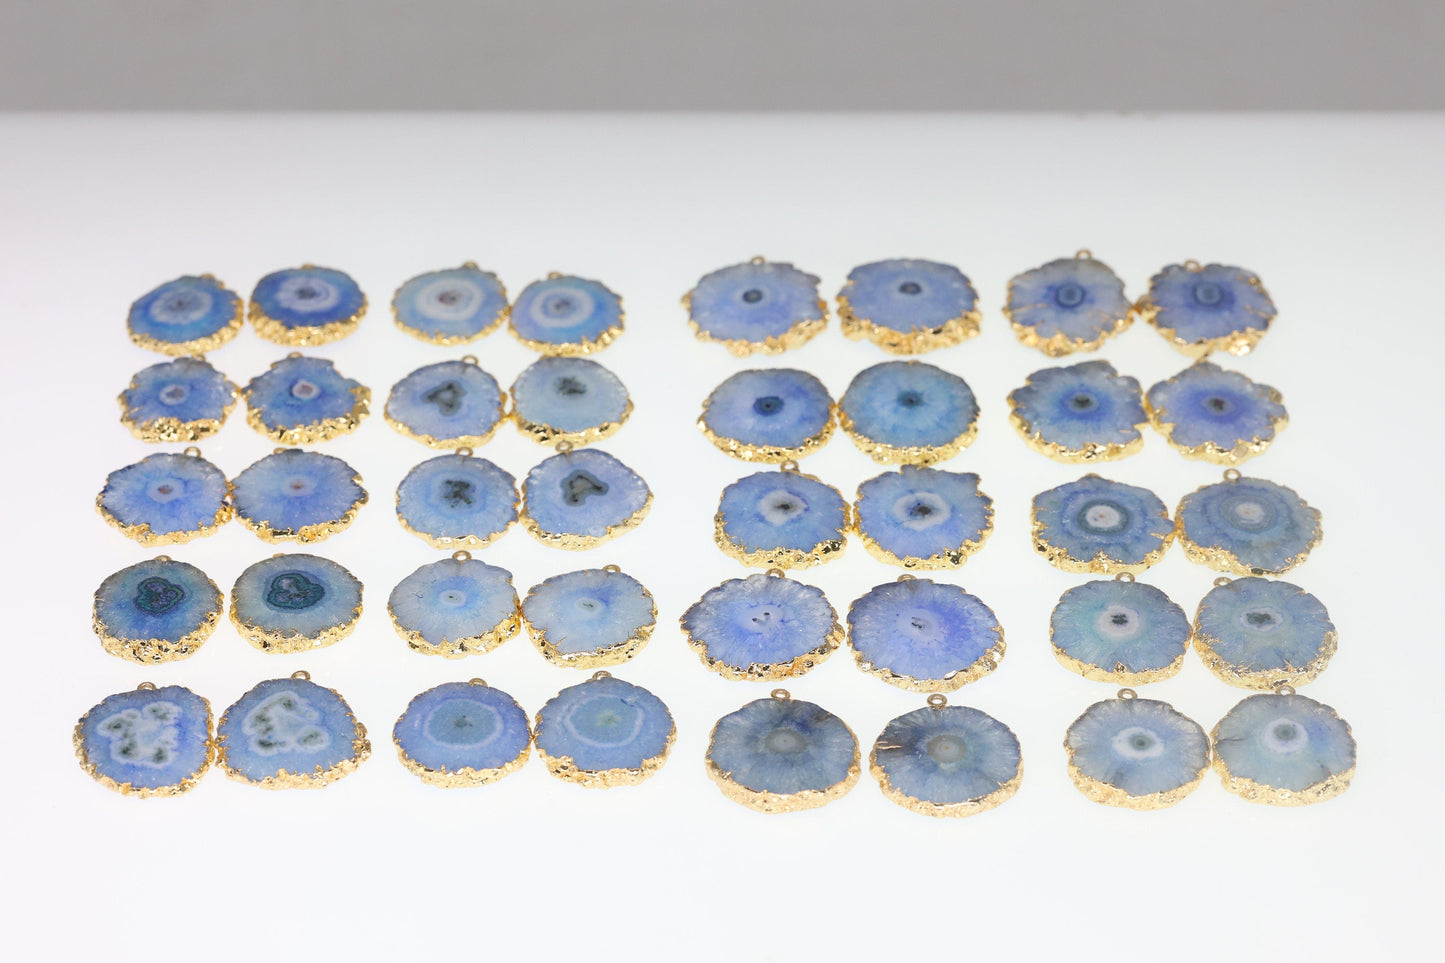 Pairs Blue Solar Quartz Gemstones For Earring 1 Bail Gold edged 20 - 30 mm 2 Side Hand Polished - Meena Design